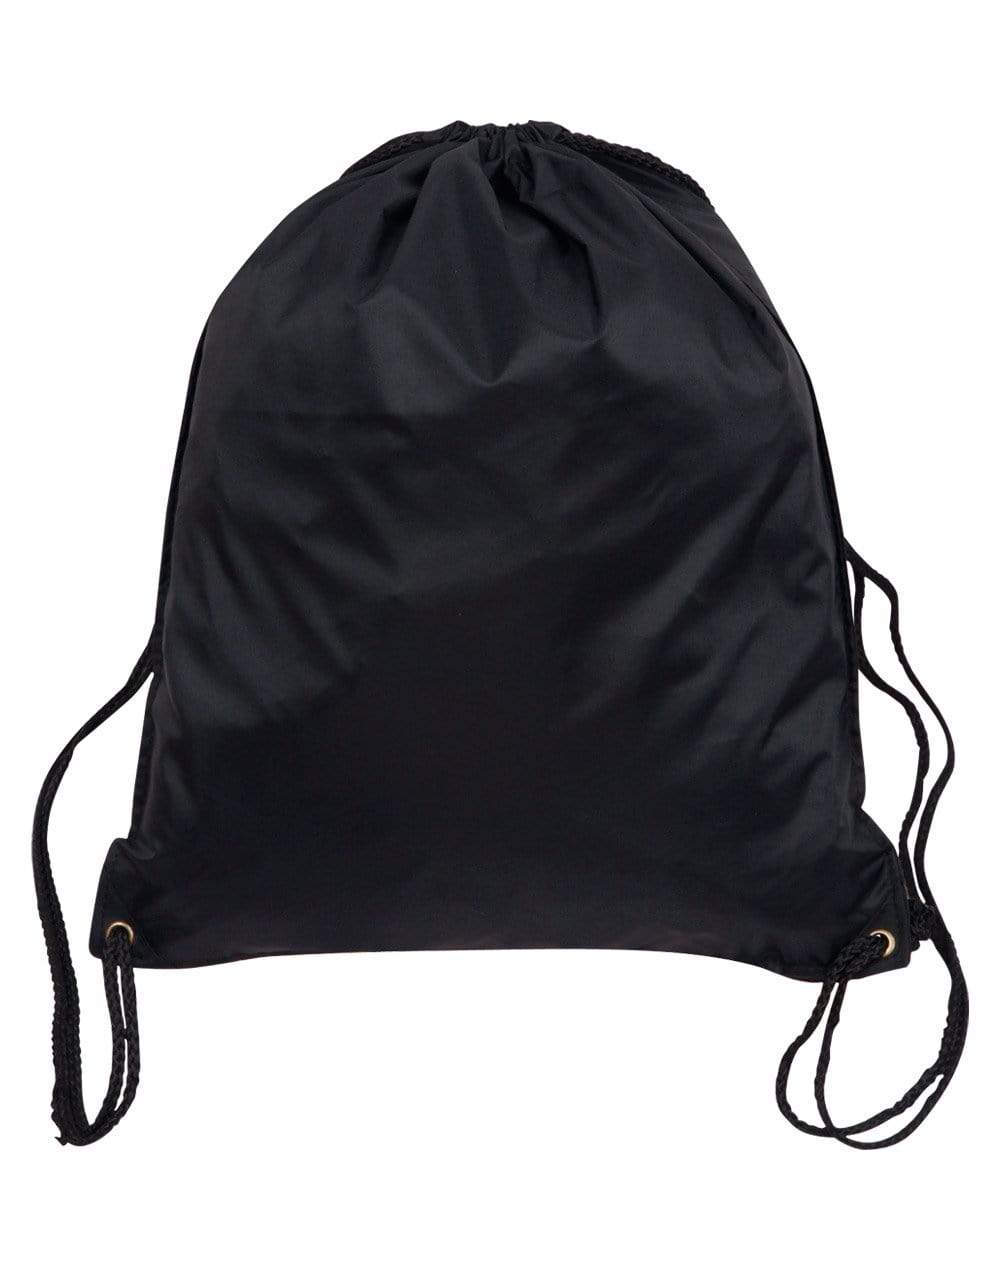 Swim Backpack B4112 Active Wear Winning Spirit Black (w)39cm x (h)46.5cm 